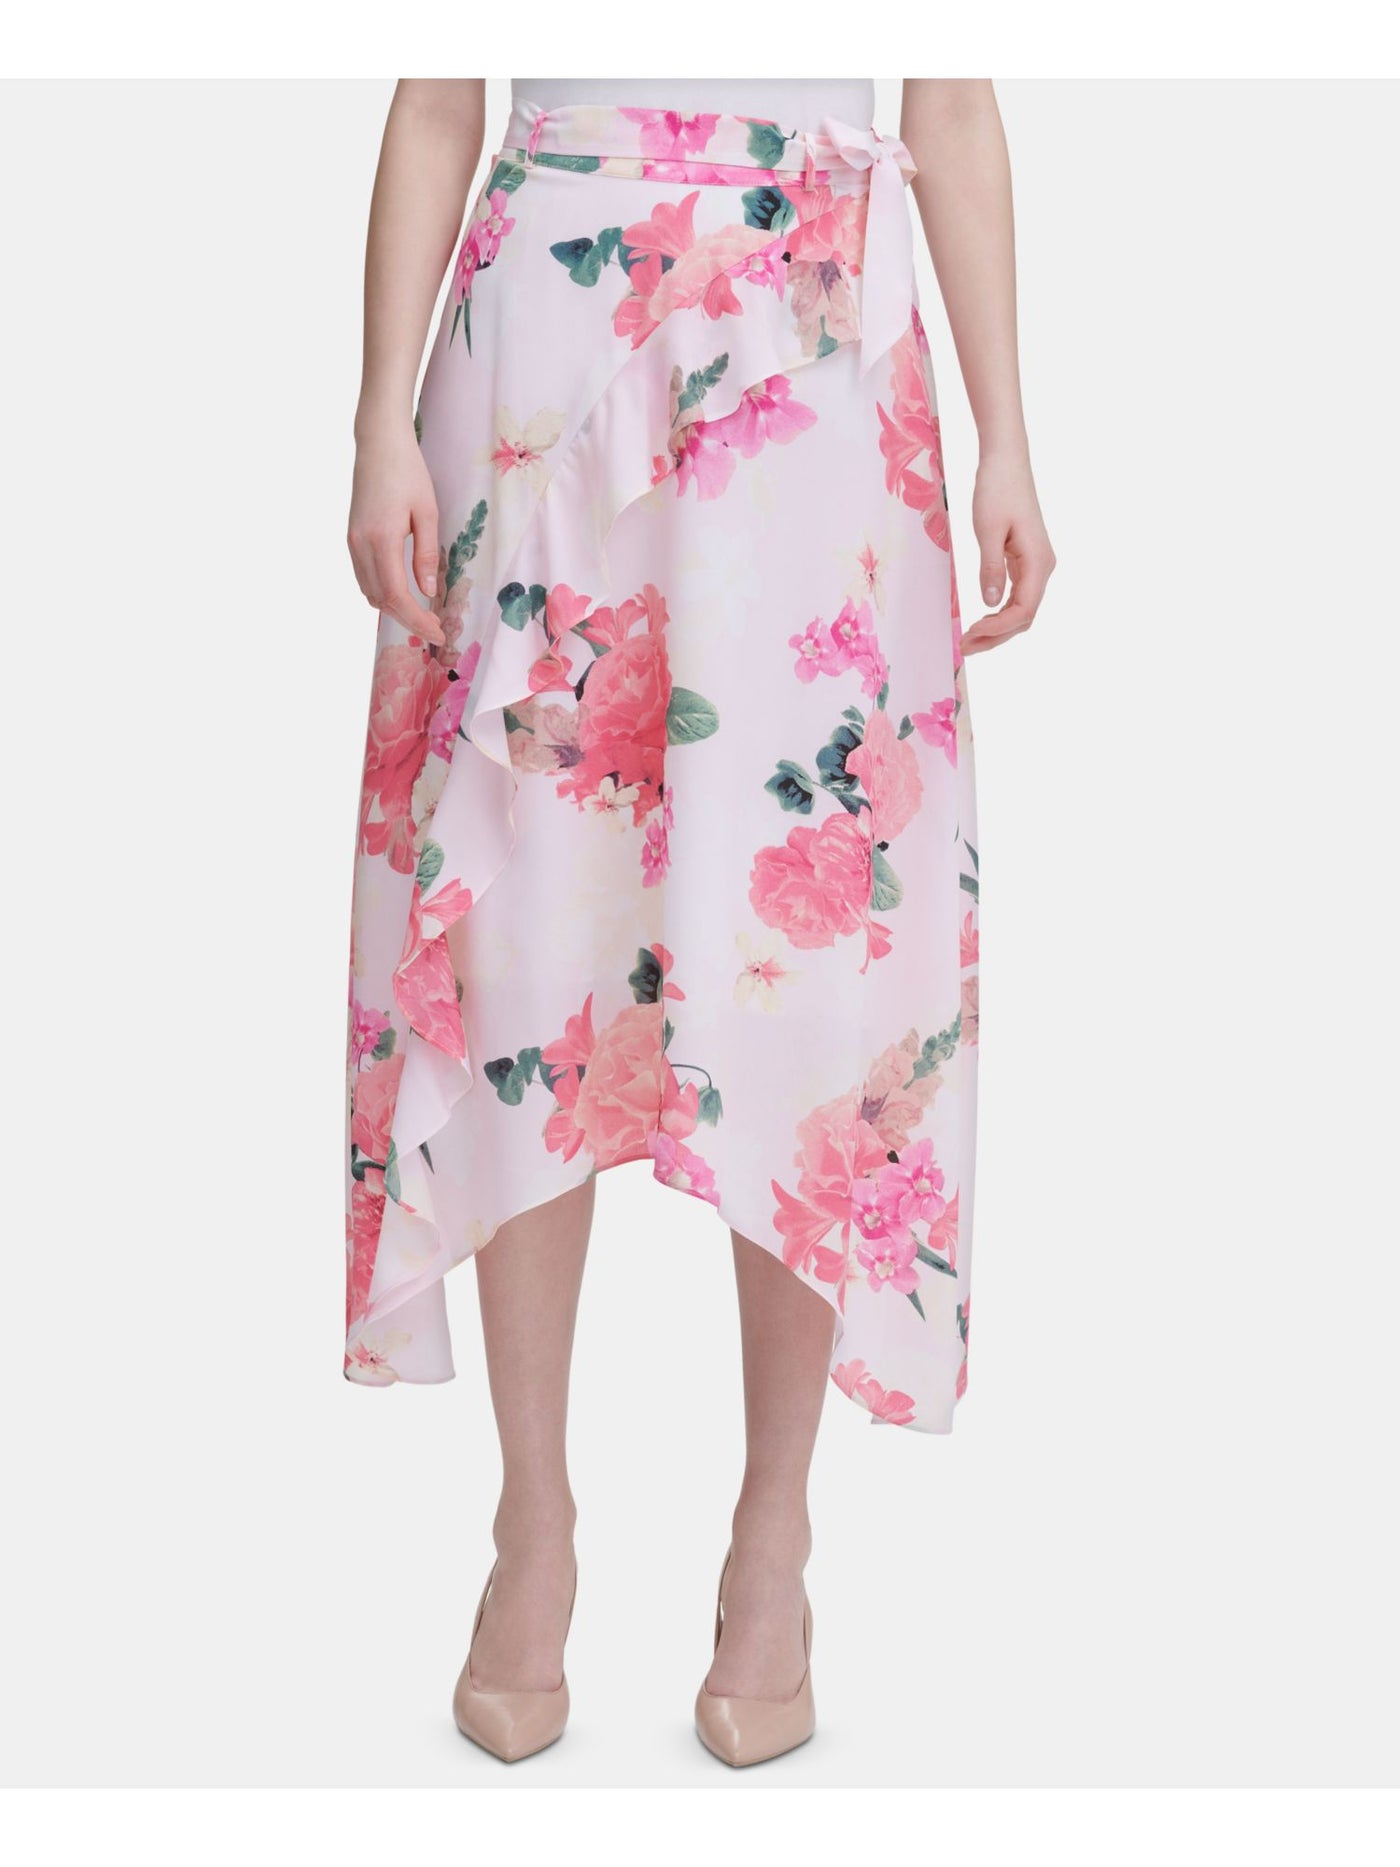 CALVIN KLEIN Womens Pink Floral Layered Skirt Size: 14